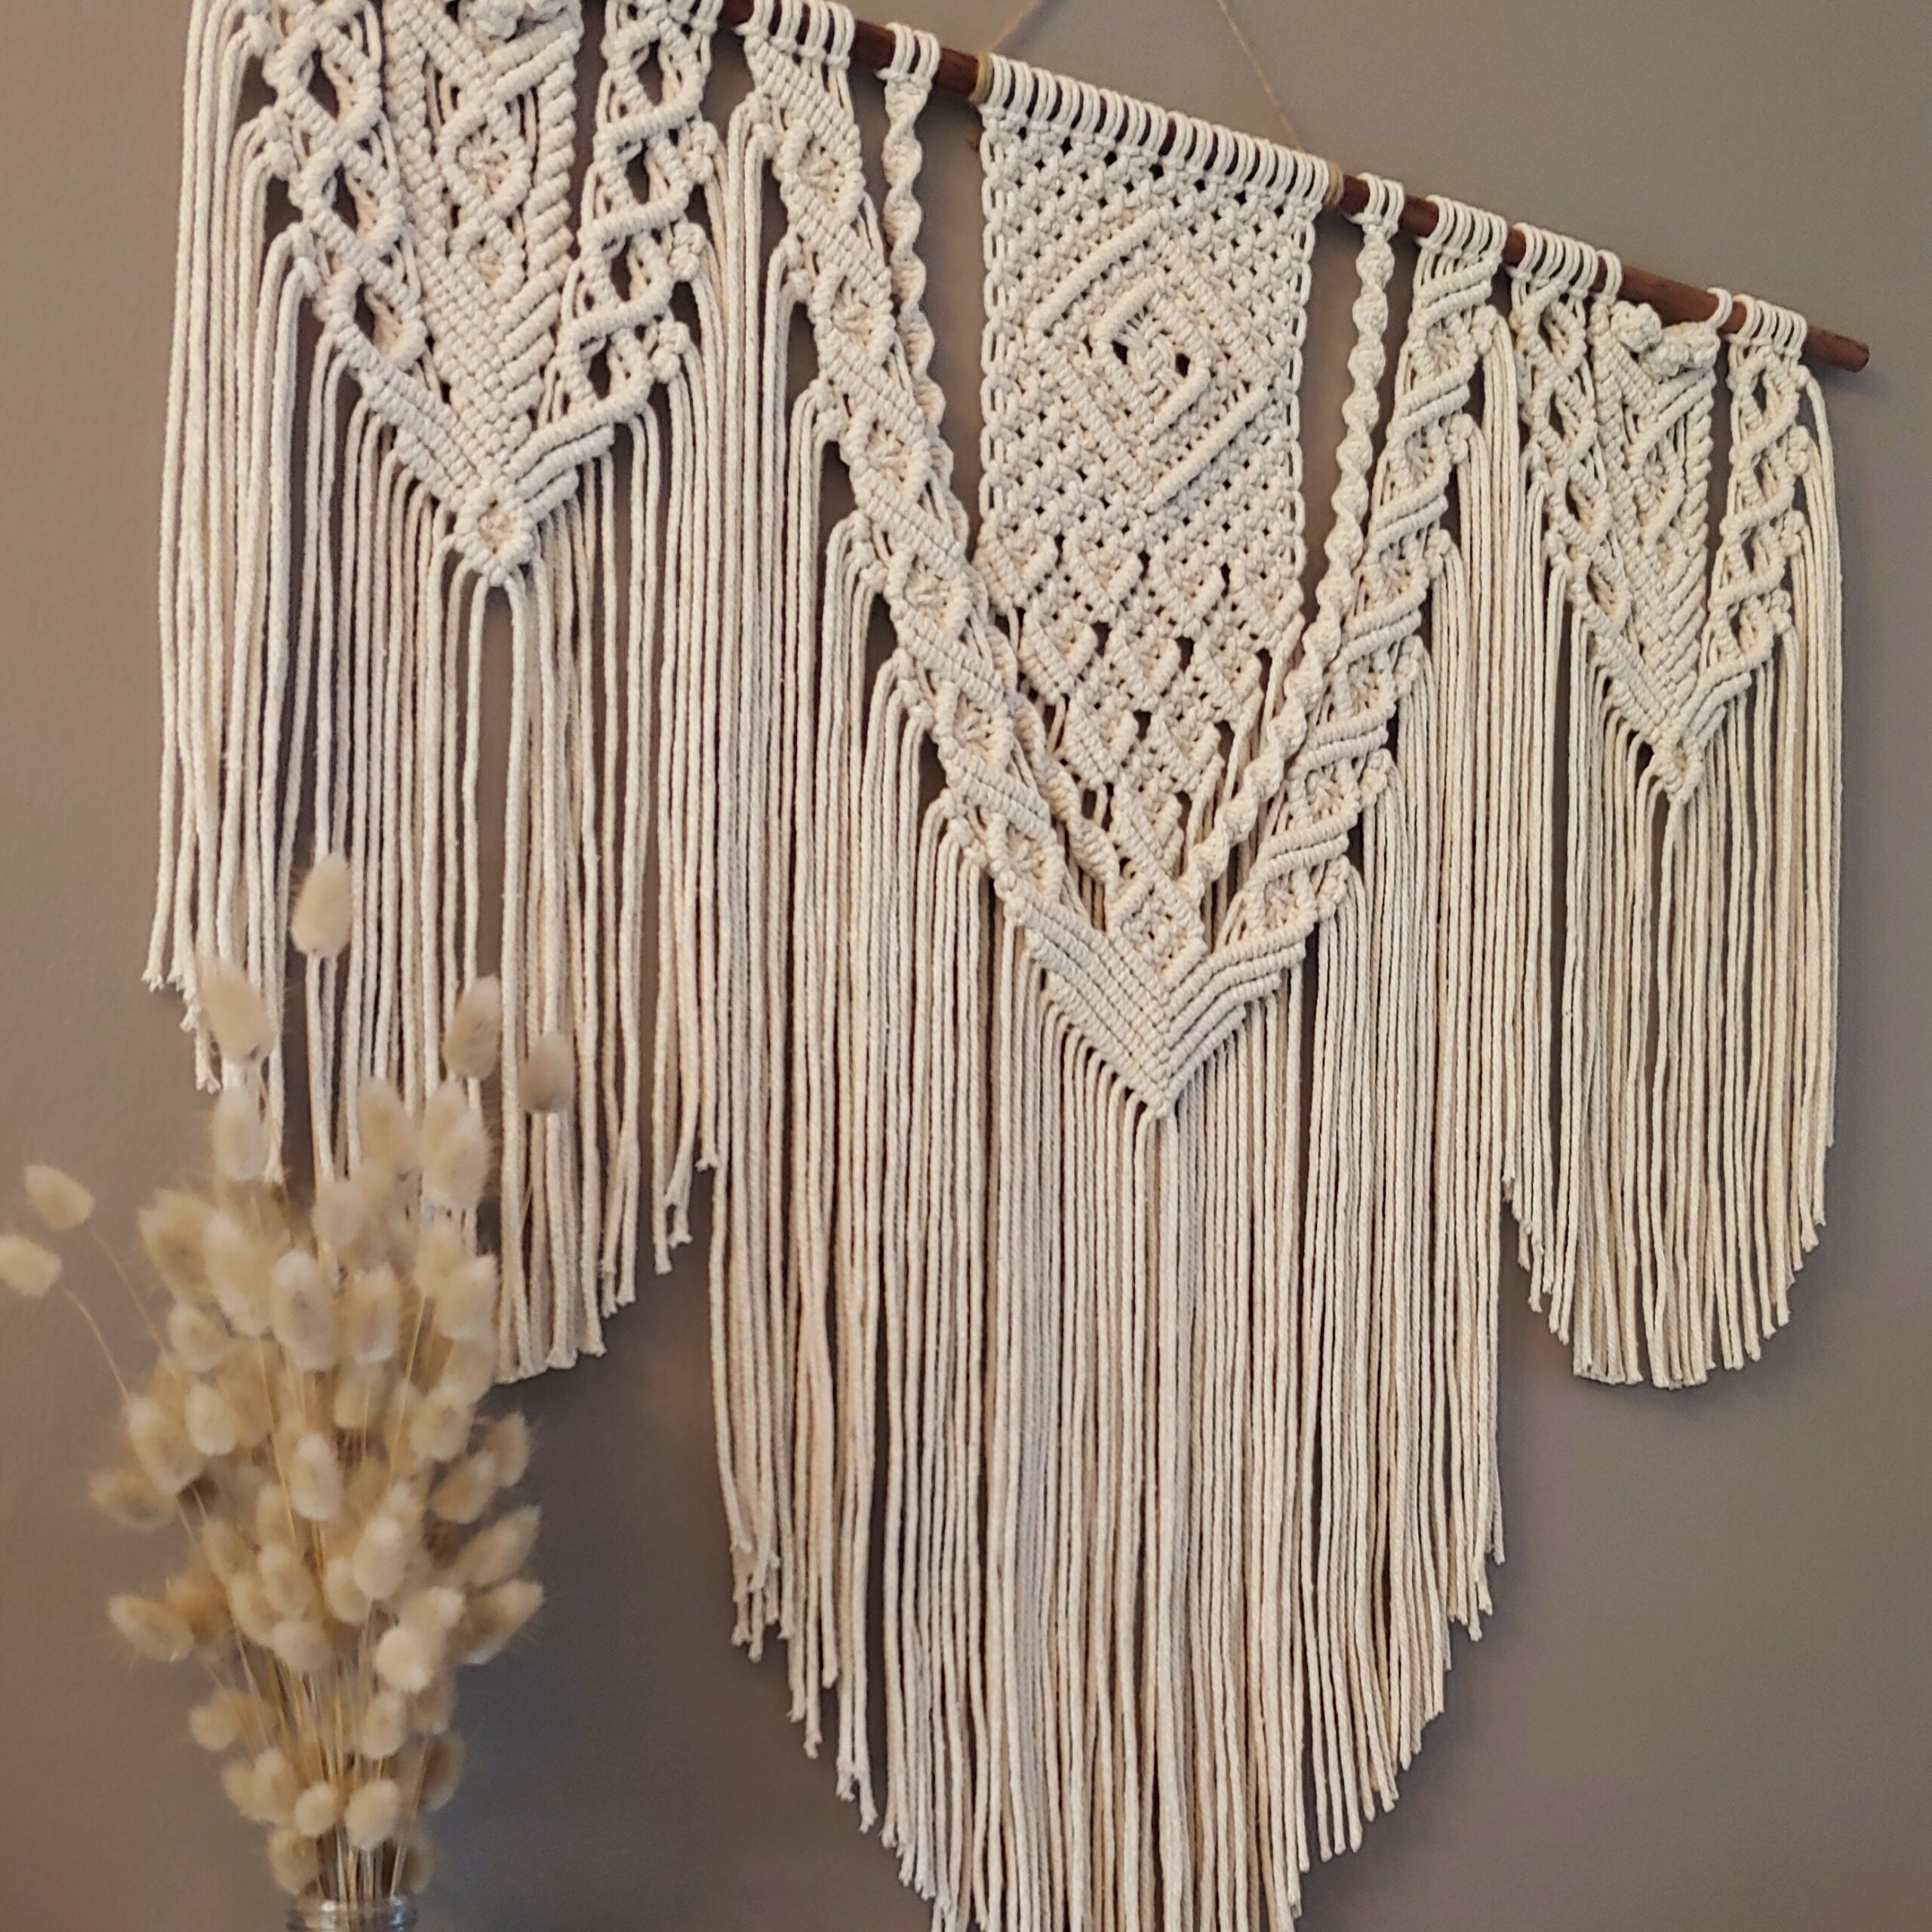 Kelly - Macramé Wall Hanging ⋆ Needle & Claw